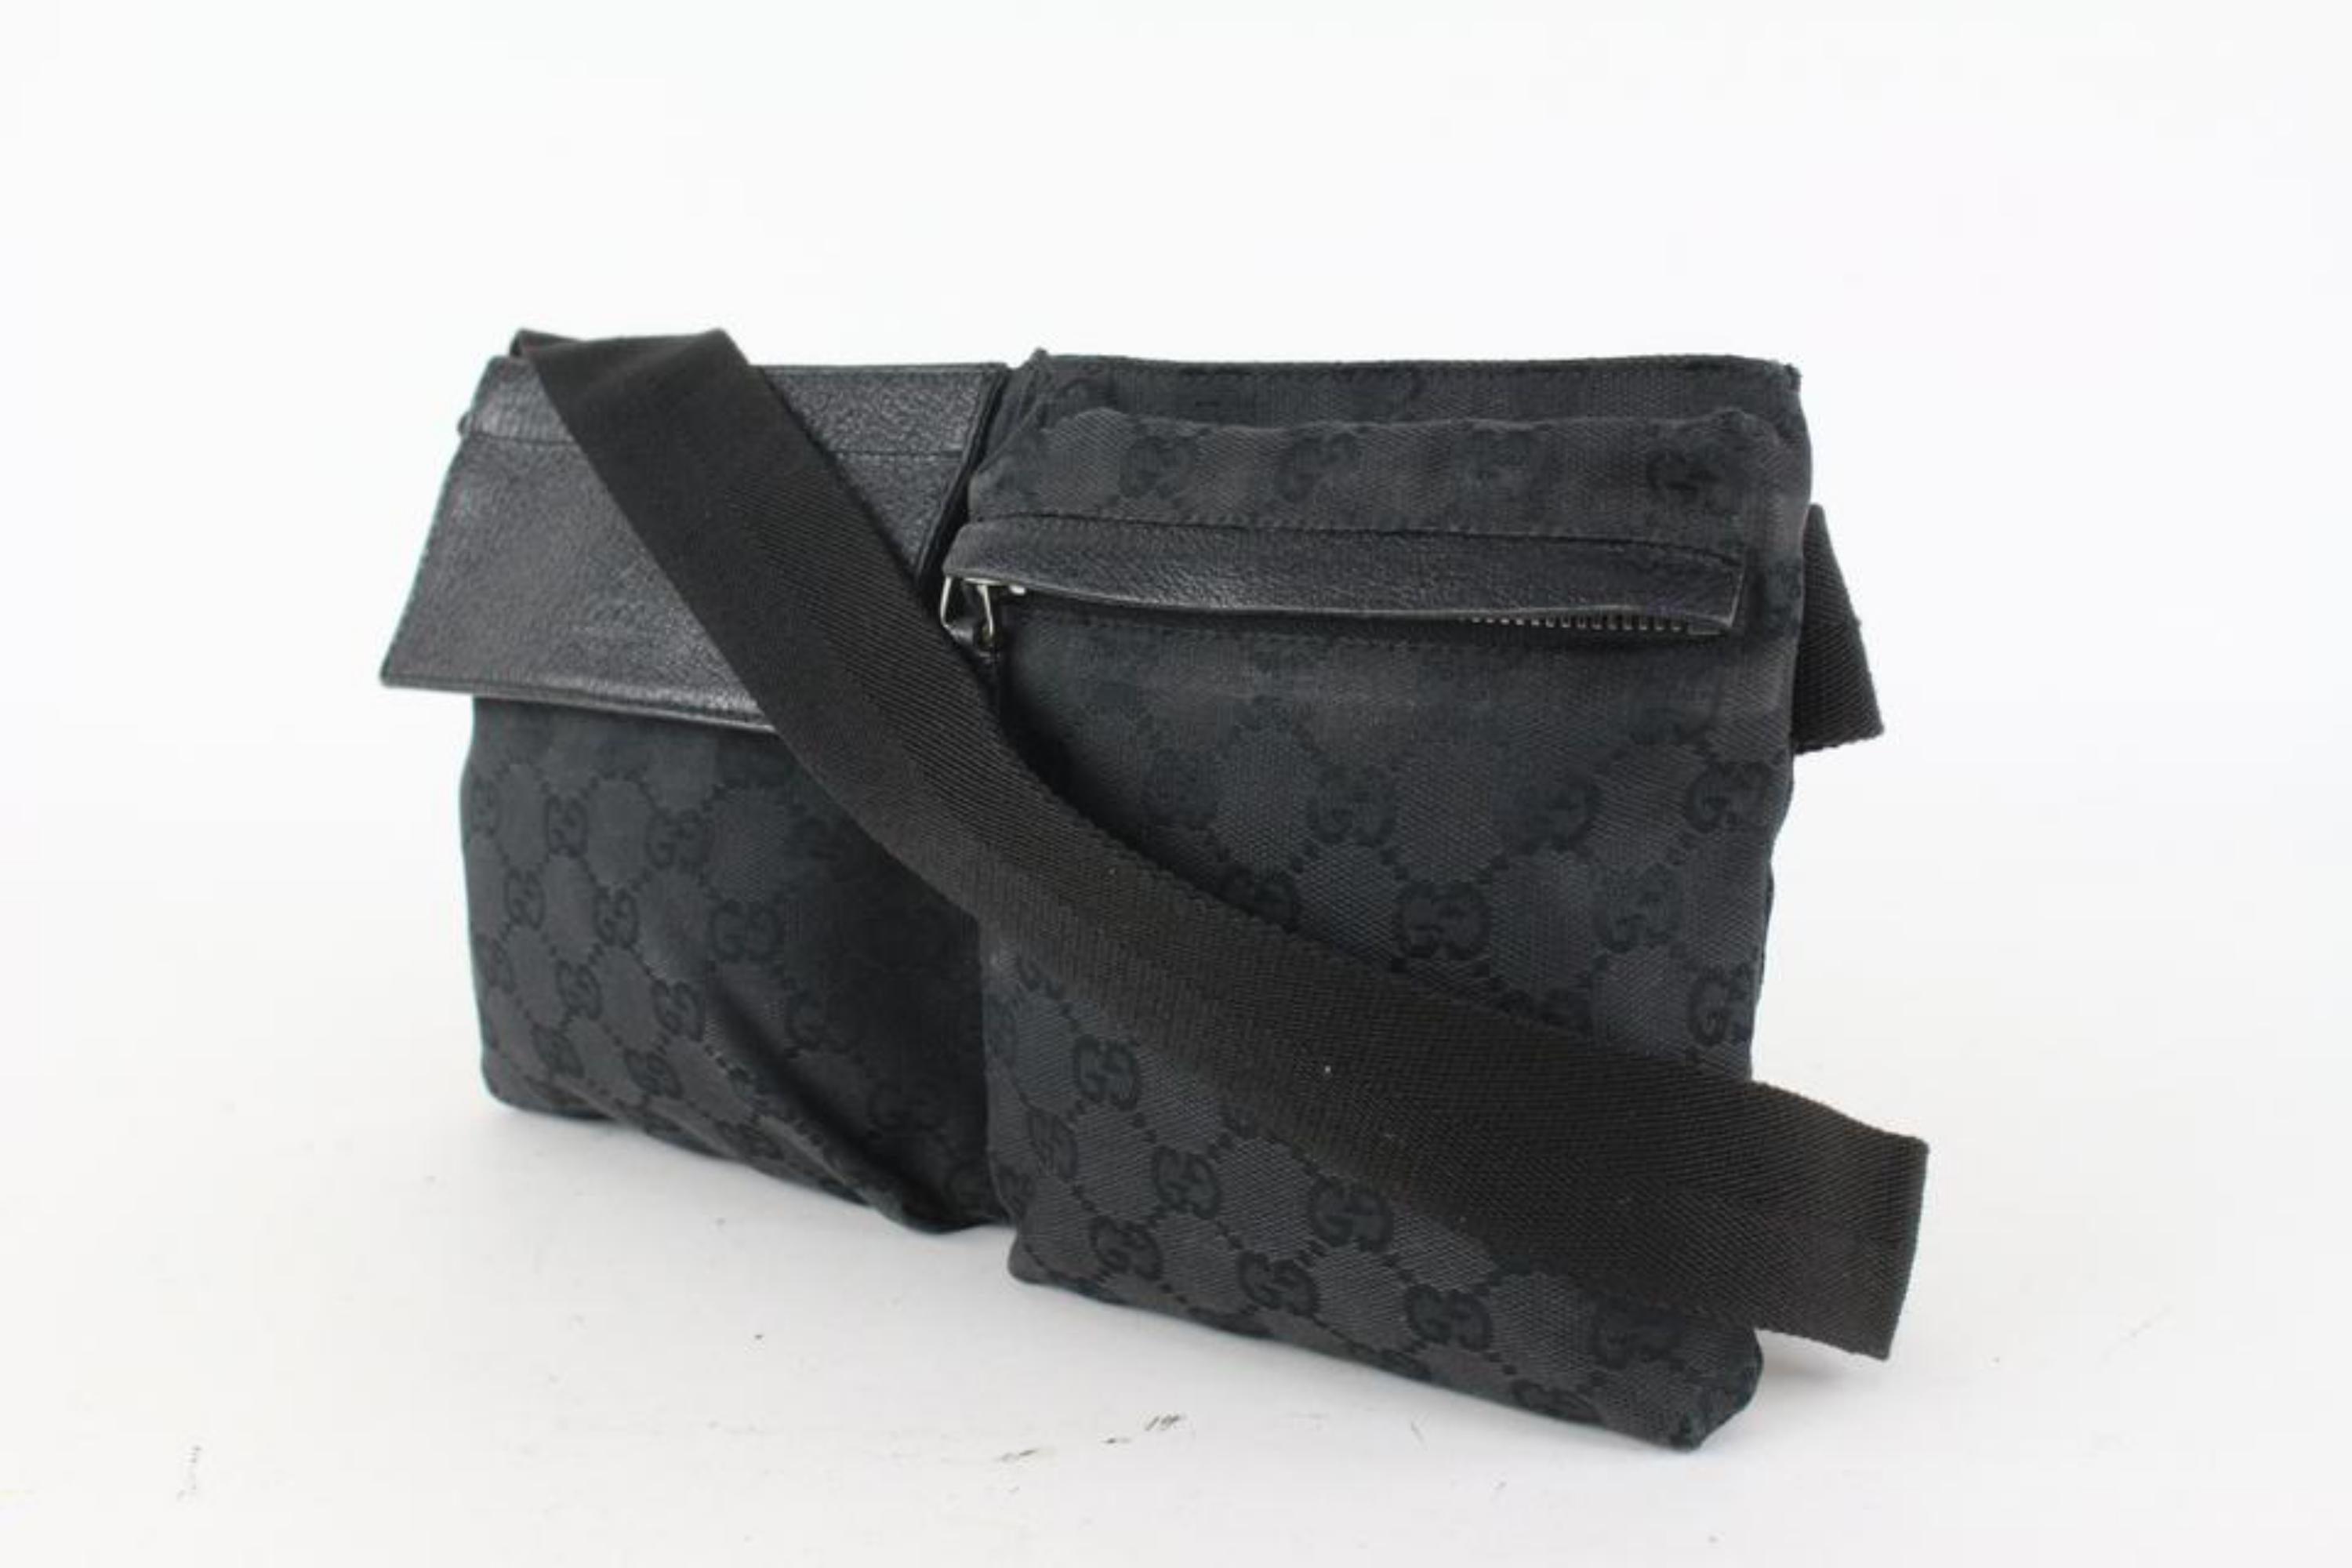 Gucci Black Monogram GG Belt Bag Fanny Pack Waist Pouch 105g5 5